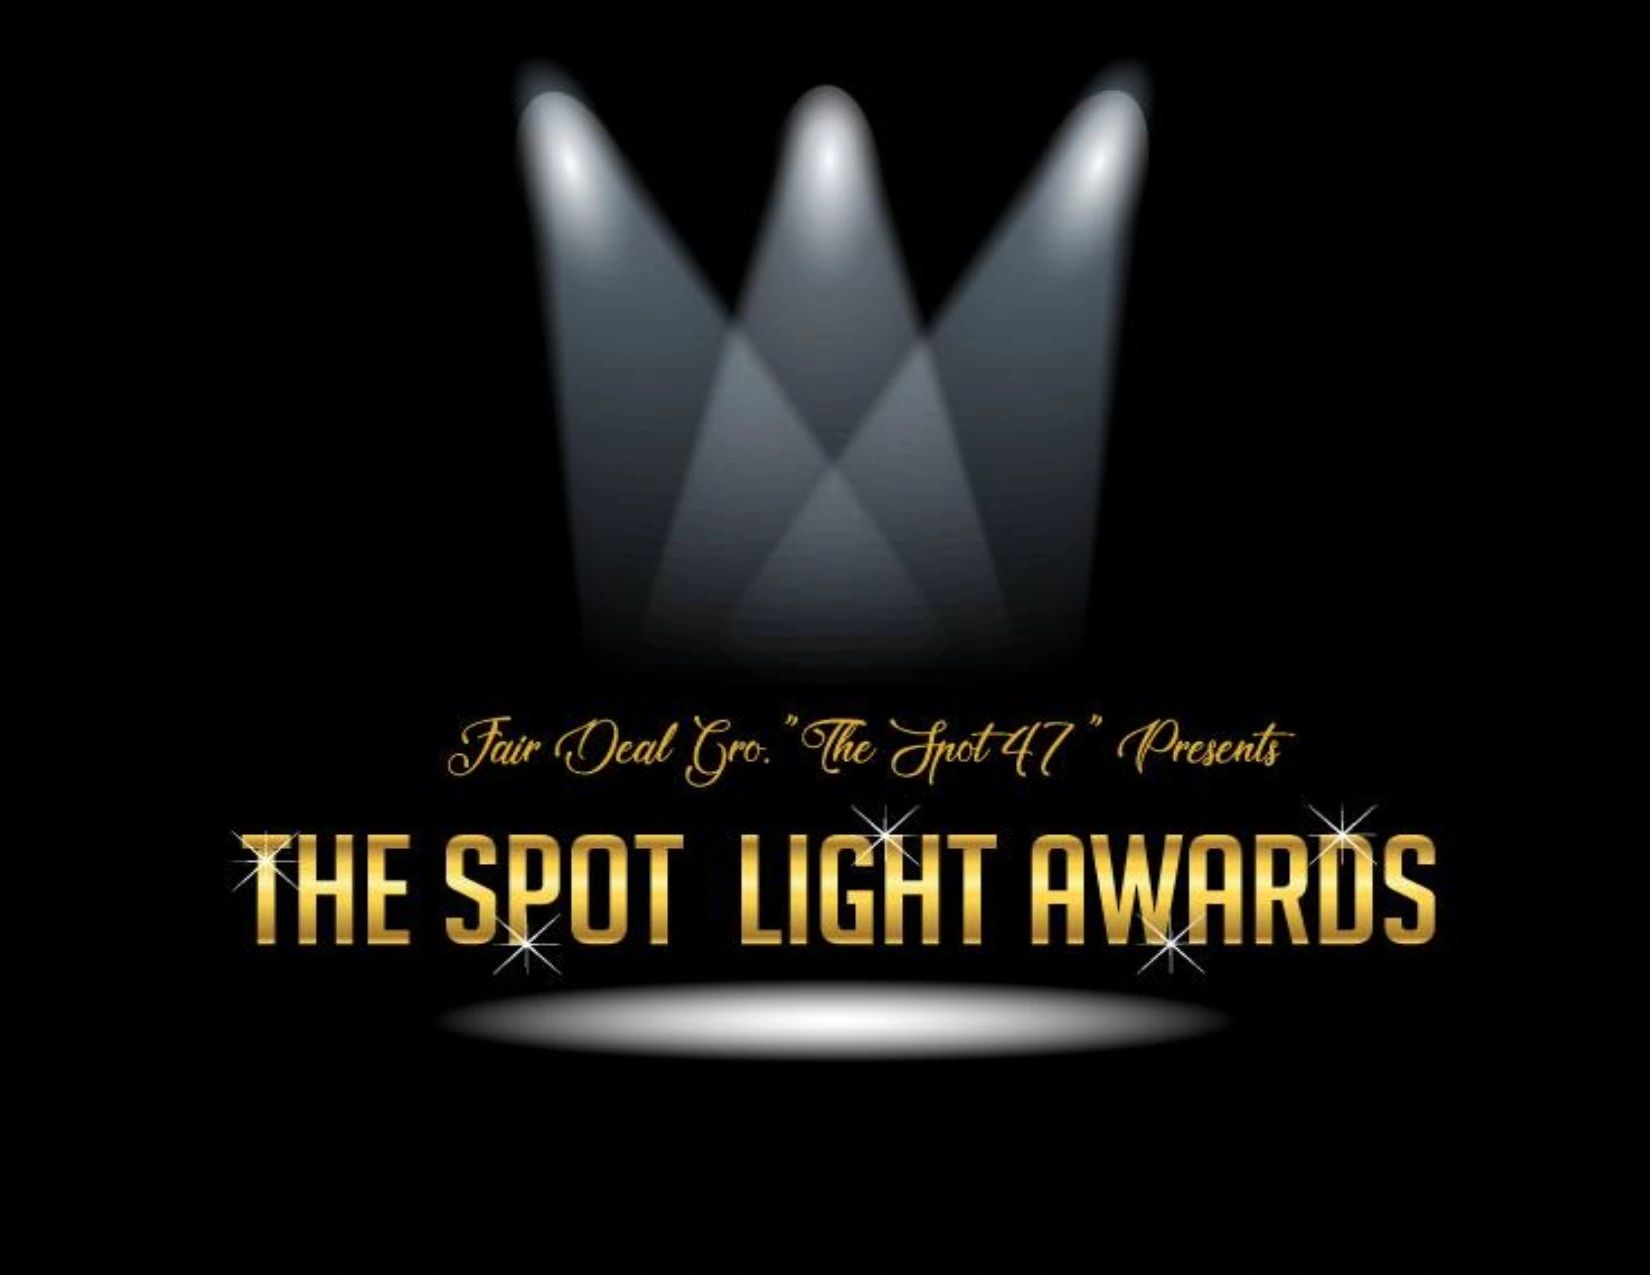 The Spot Light Awards